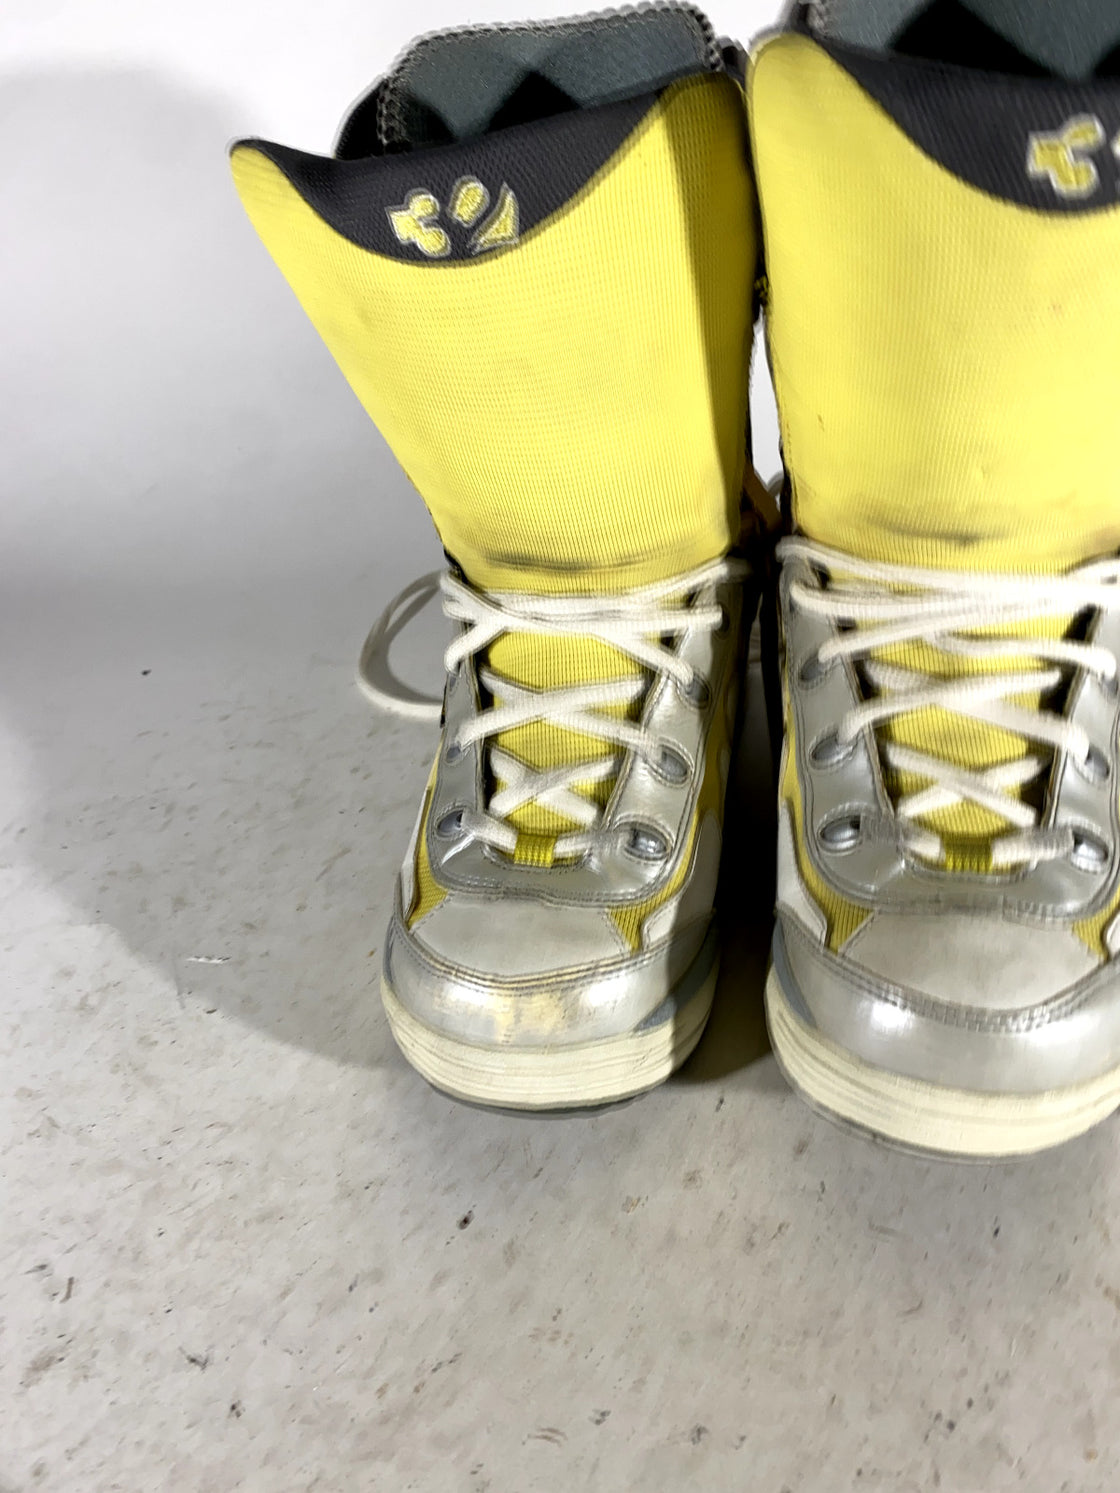 THIRTYTWO Snowboard Boots Ladies Size EU38.5 US7.5 UK5.5 Mondo 245 mm